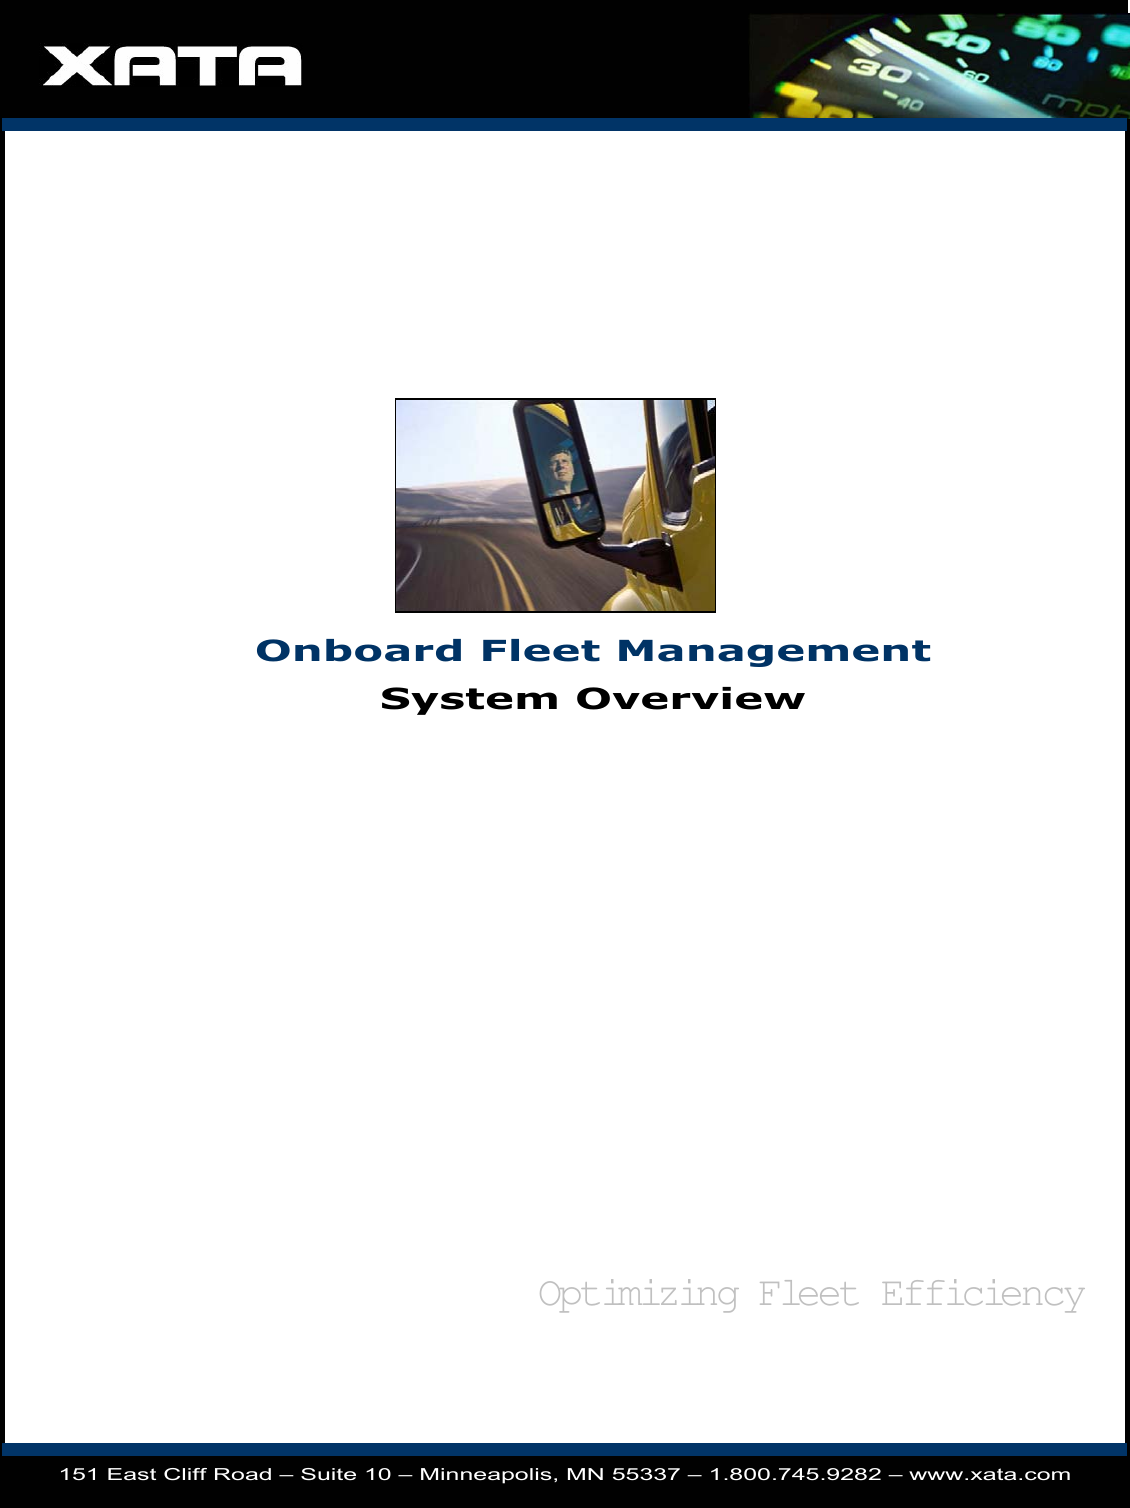     Onboard Fleet Management  System Overview 151 East Cliff Road – Suite 10 – Minneapolis, MN 55337 – 1.800.745.9282 – www.xata.com Optimizing Fleet Efficiency 